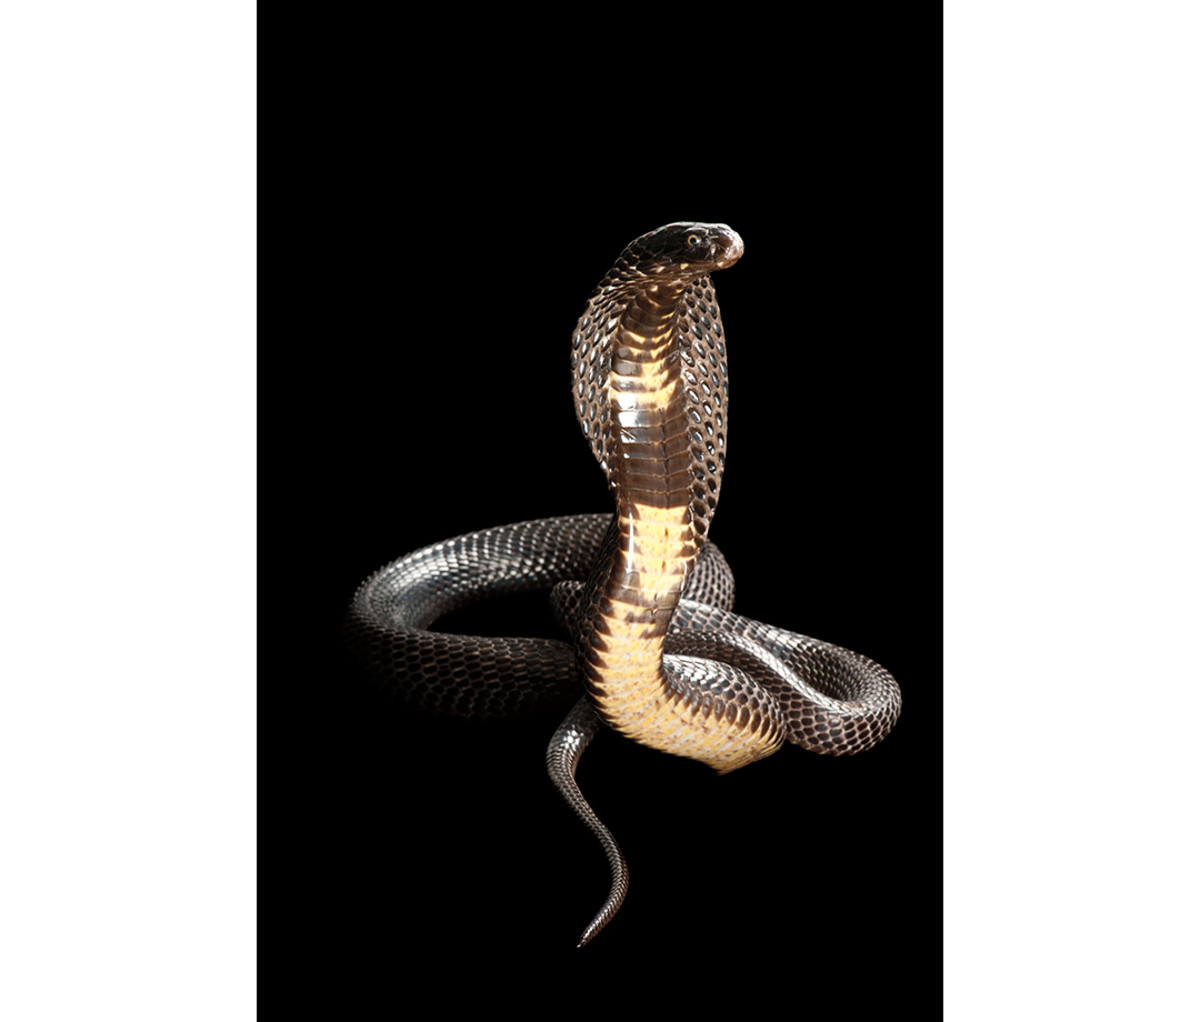 A black cobra photographed by Sartore.